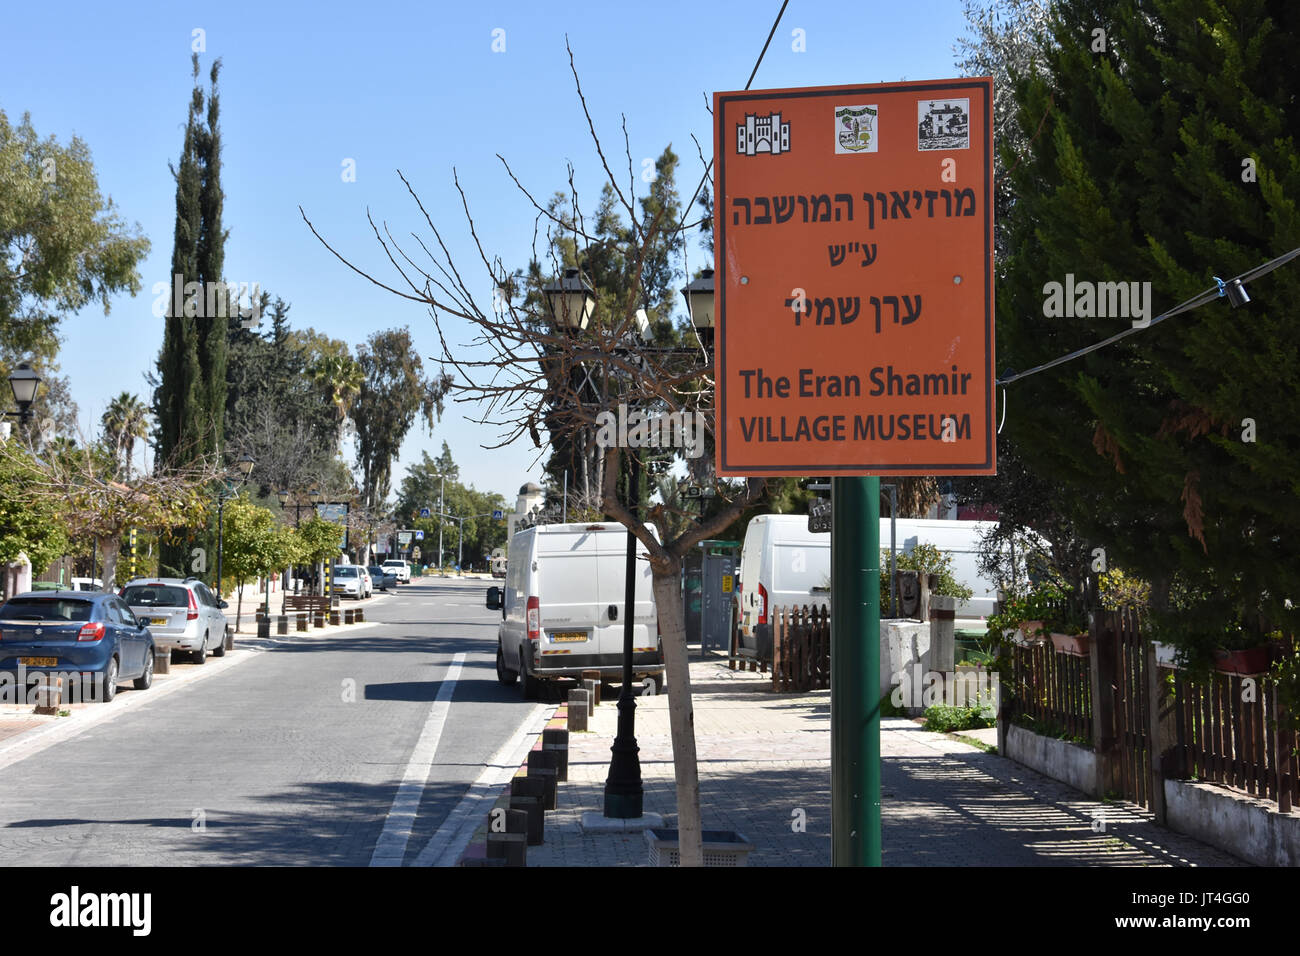 Scena di strada in Israele - segno legge Eram Shamir Museum Foto Stock